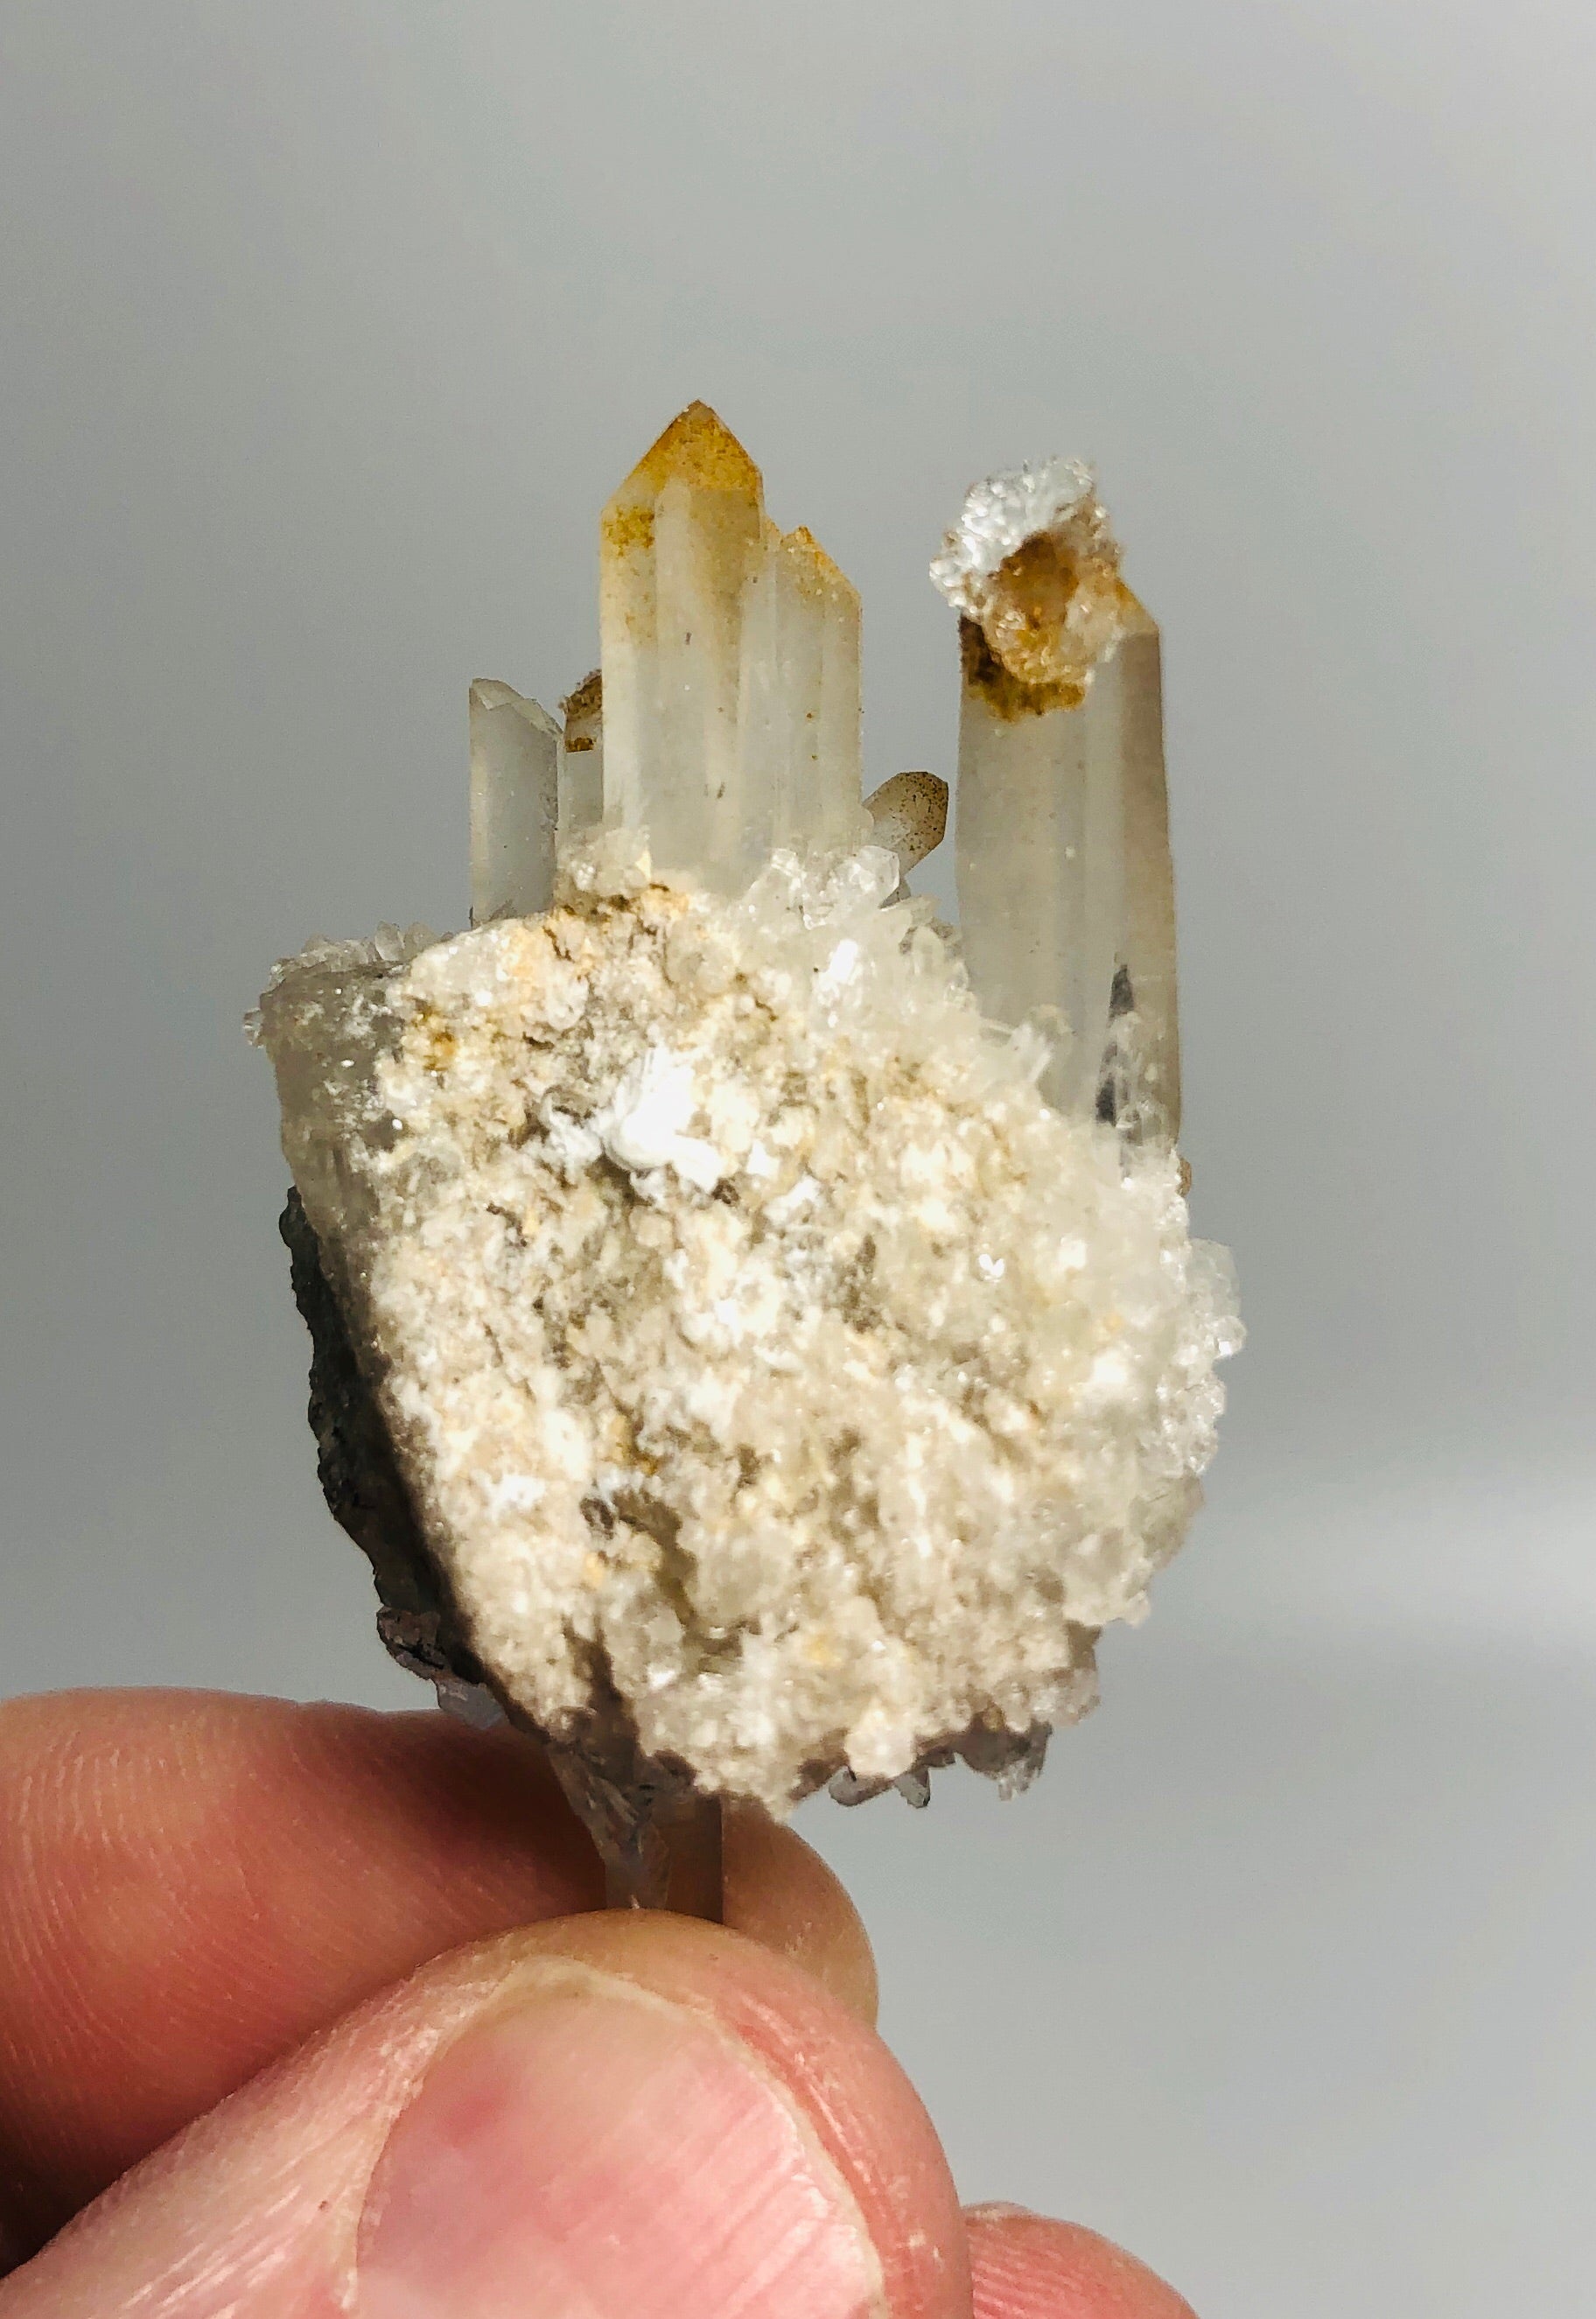 Quartz w/ Fluorite, Goshenite, & Hyalite Opal, Namibia